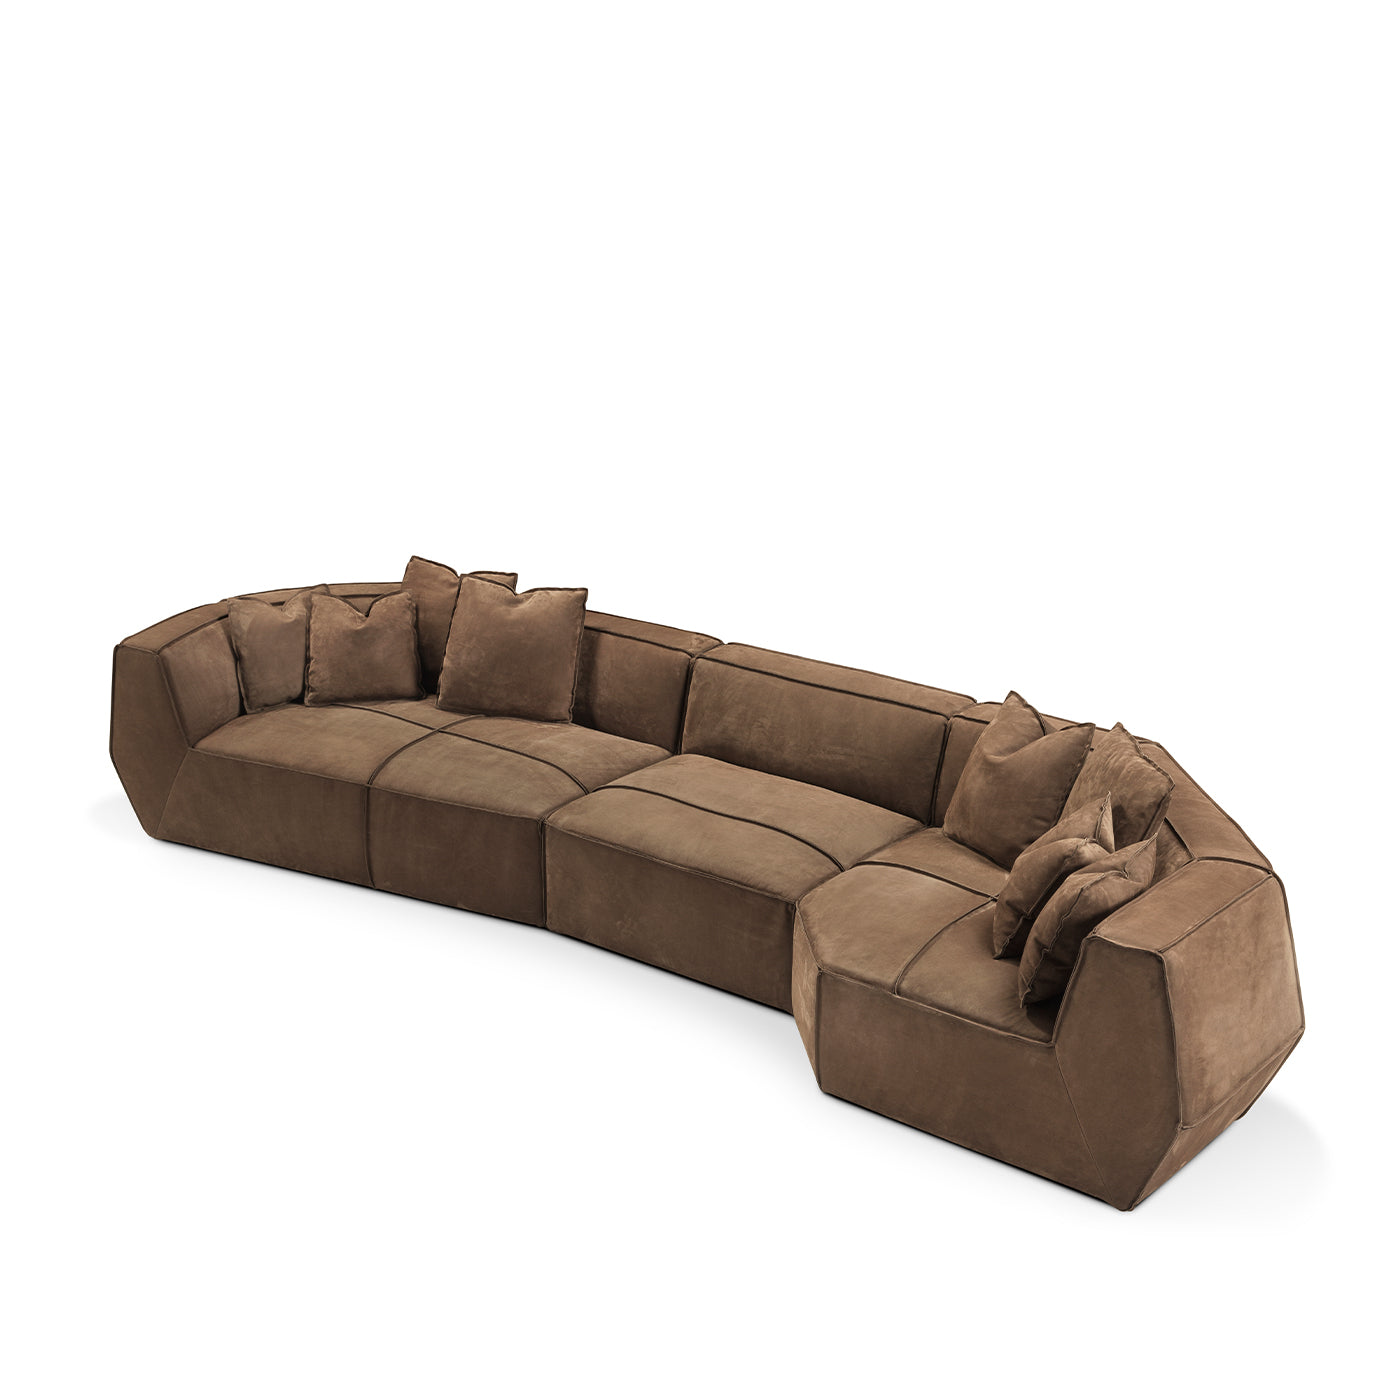 Infinito Large Brown Sofa by Lorenza Bozzoli - Alternative view 2